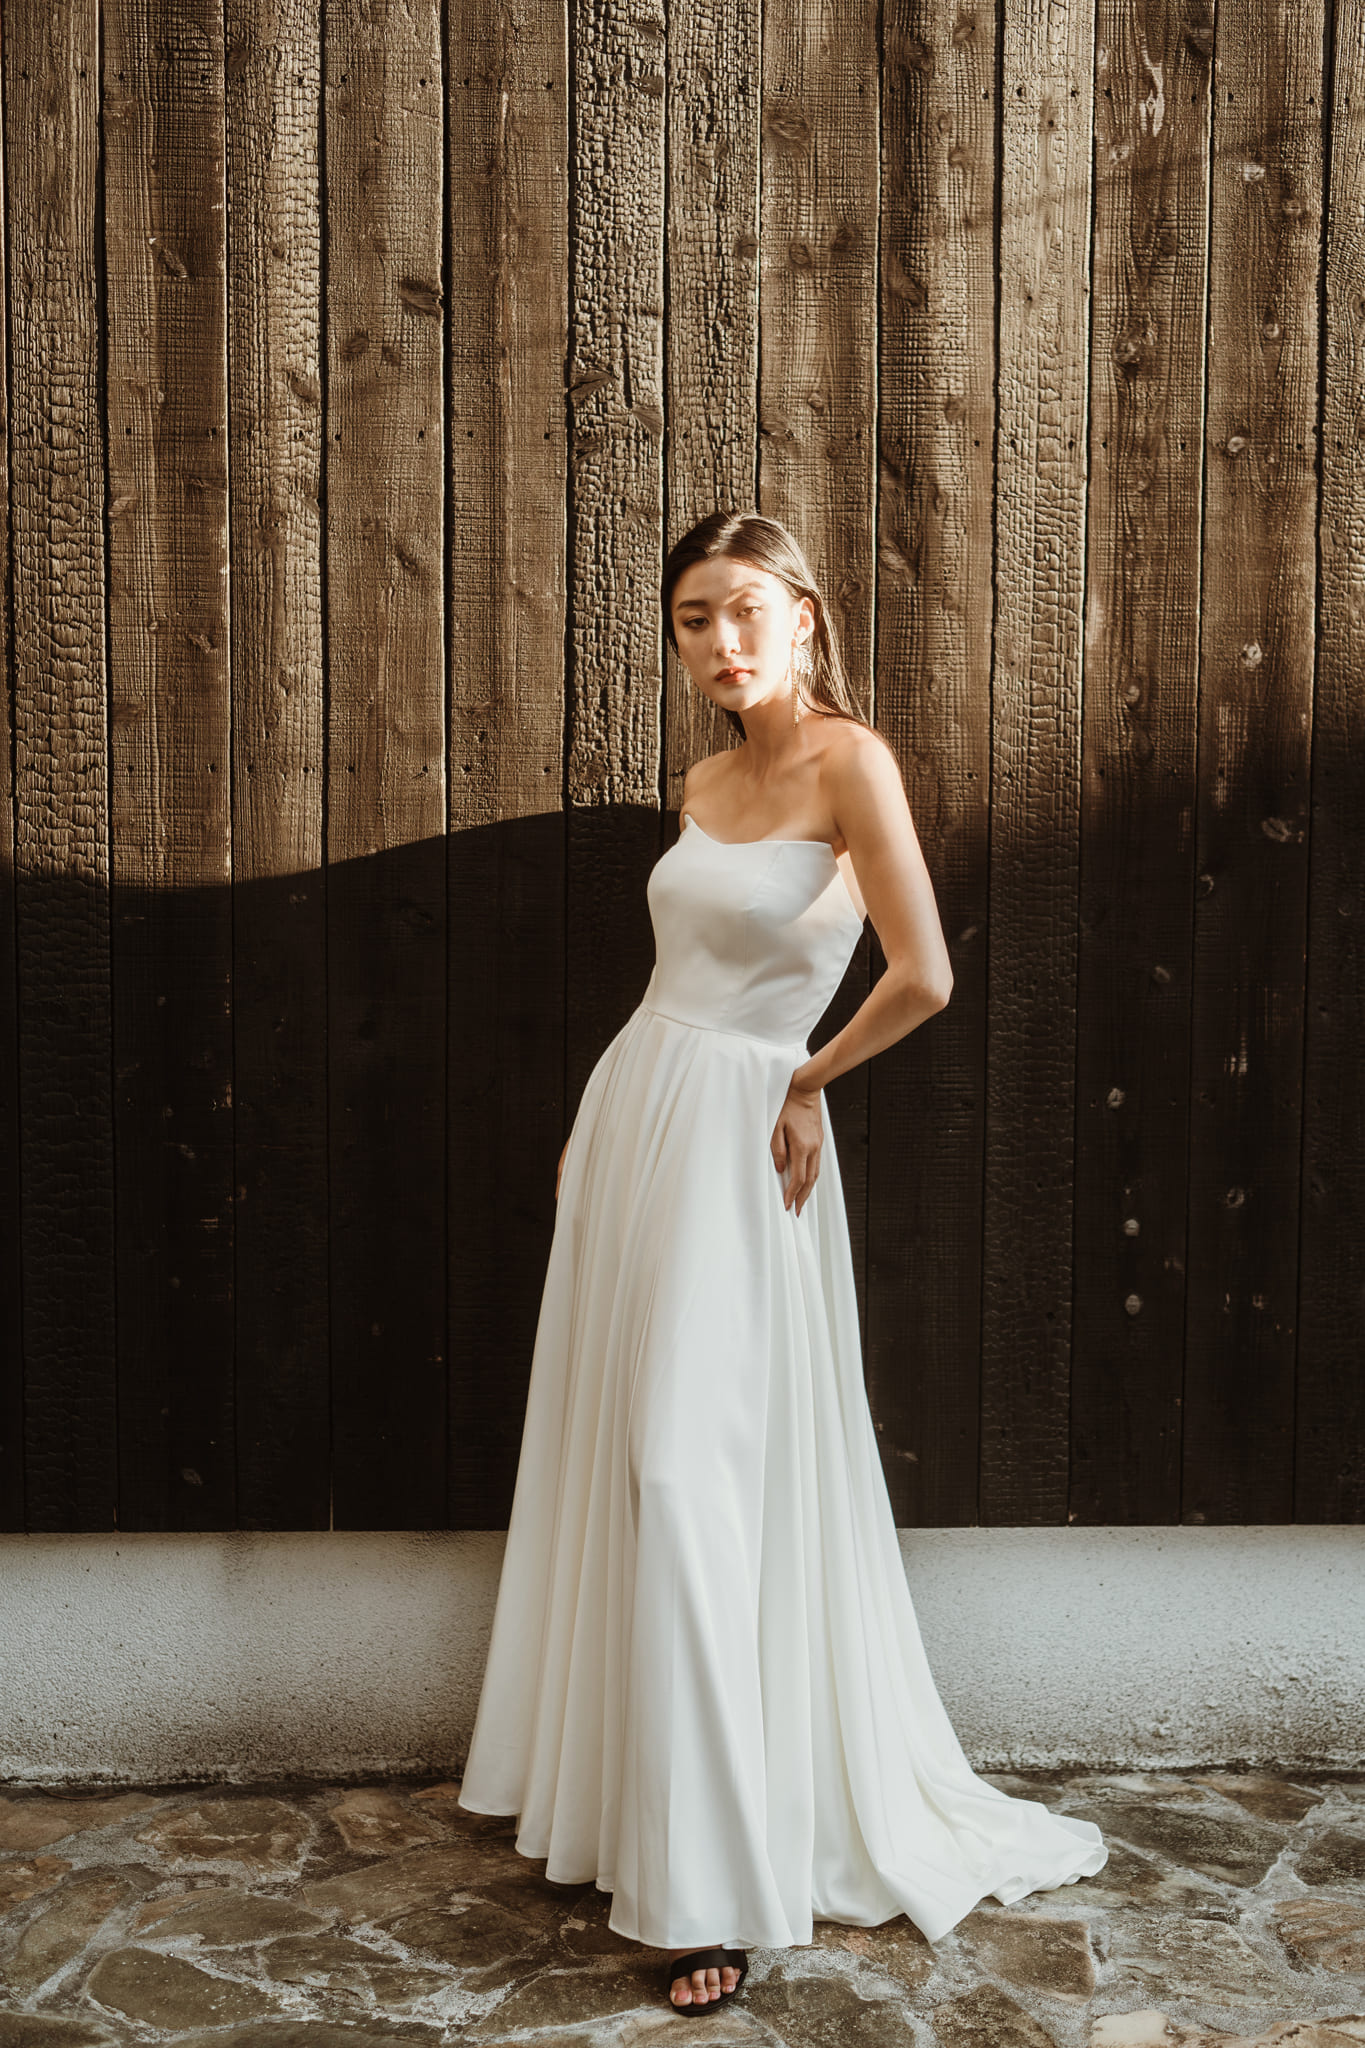 A-line婚紗在視覺上相當平衡且簡潔